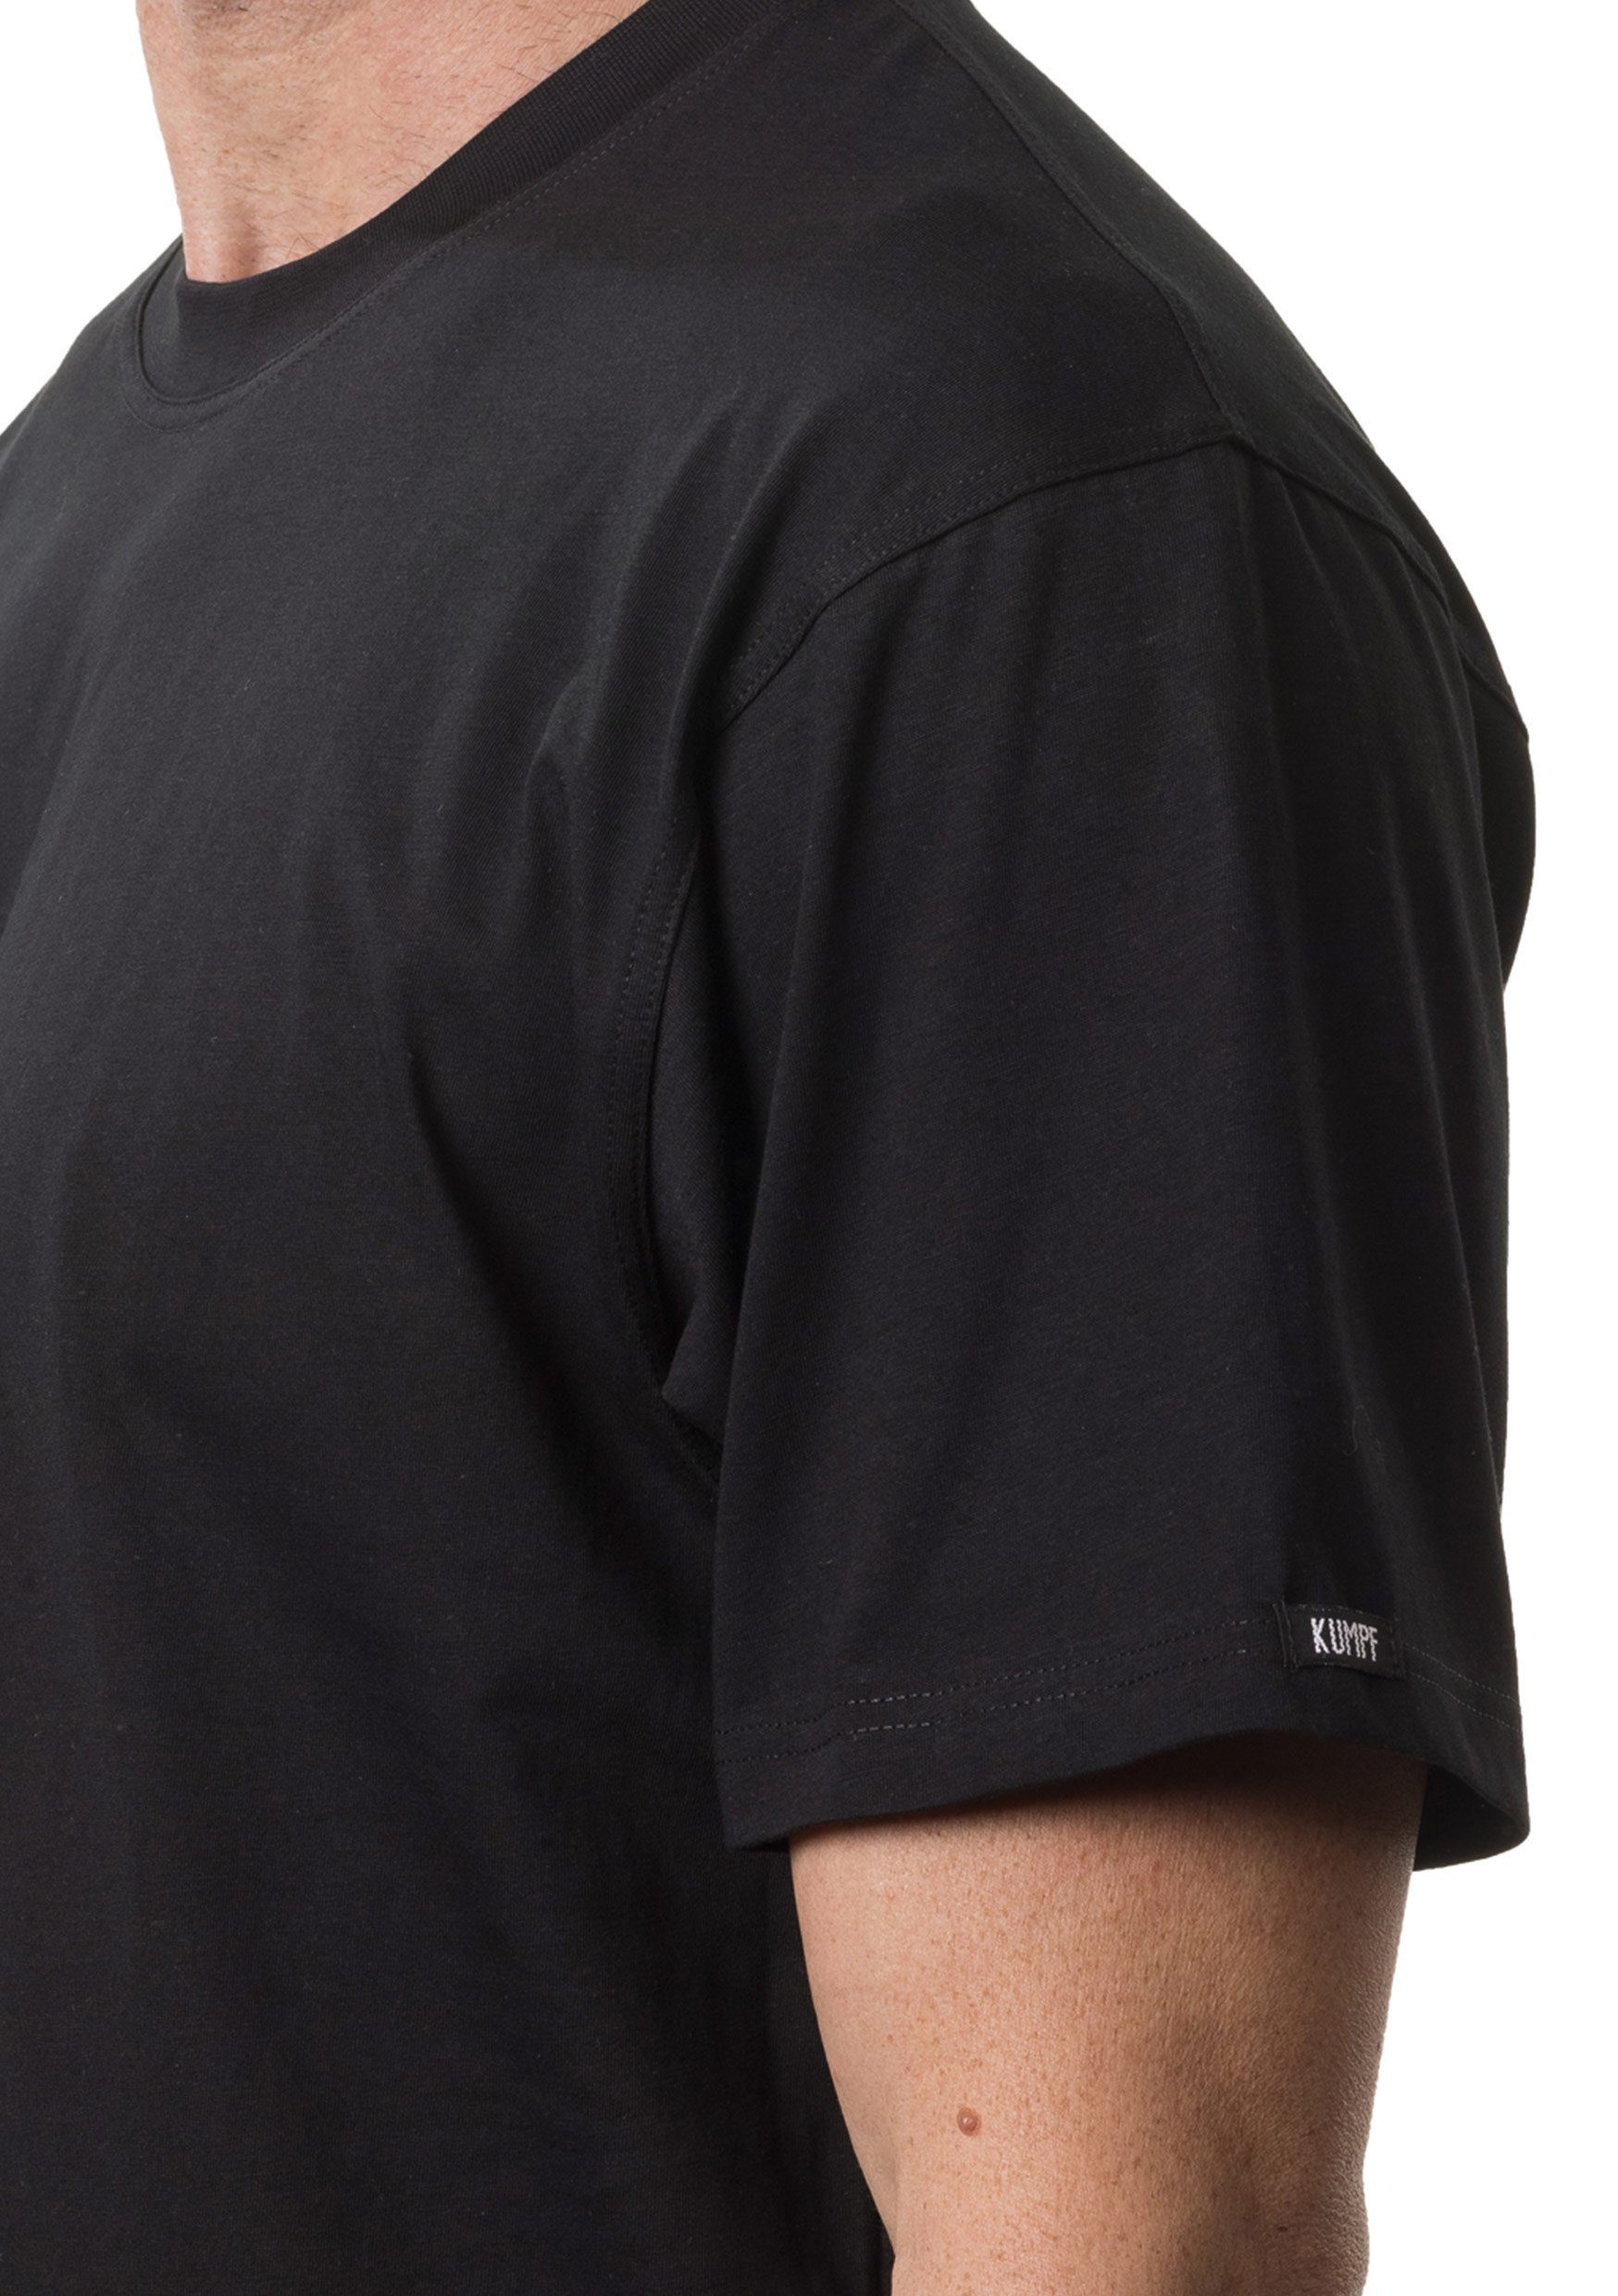 Bio (Stück, KUMPF T-Shirt 1-St) Unterziehshirt 1/2 schwarz Herren hohe Arm Cotton Markenqualität